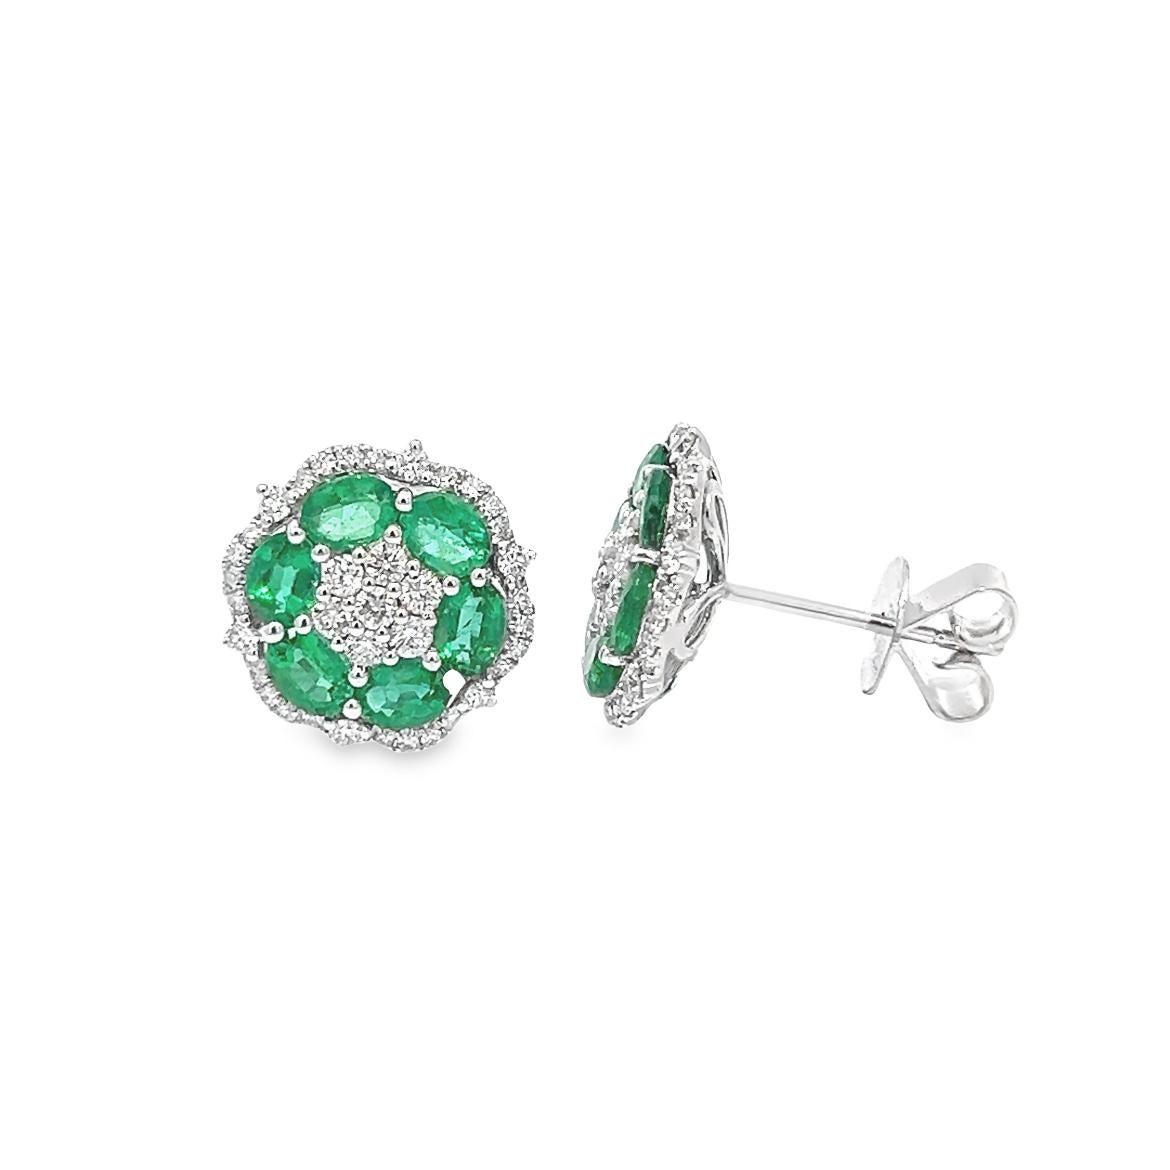 Oval Cut 2.33CT Total Weight Emeralds & Diamonds Flower Shape Earrings in 18K White Gold For Sale